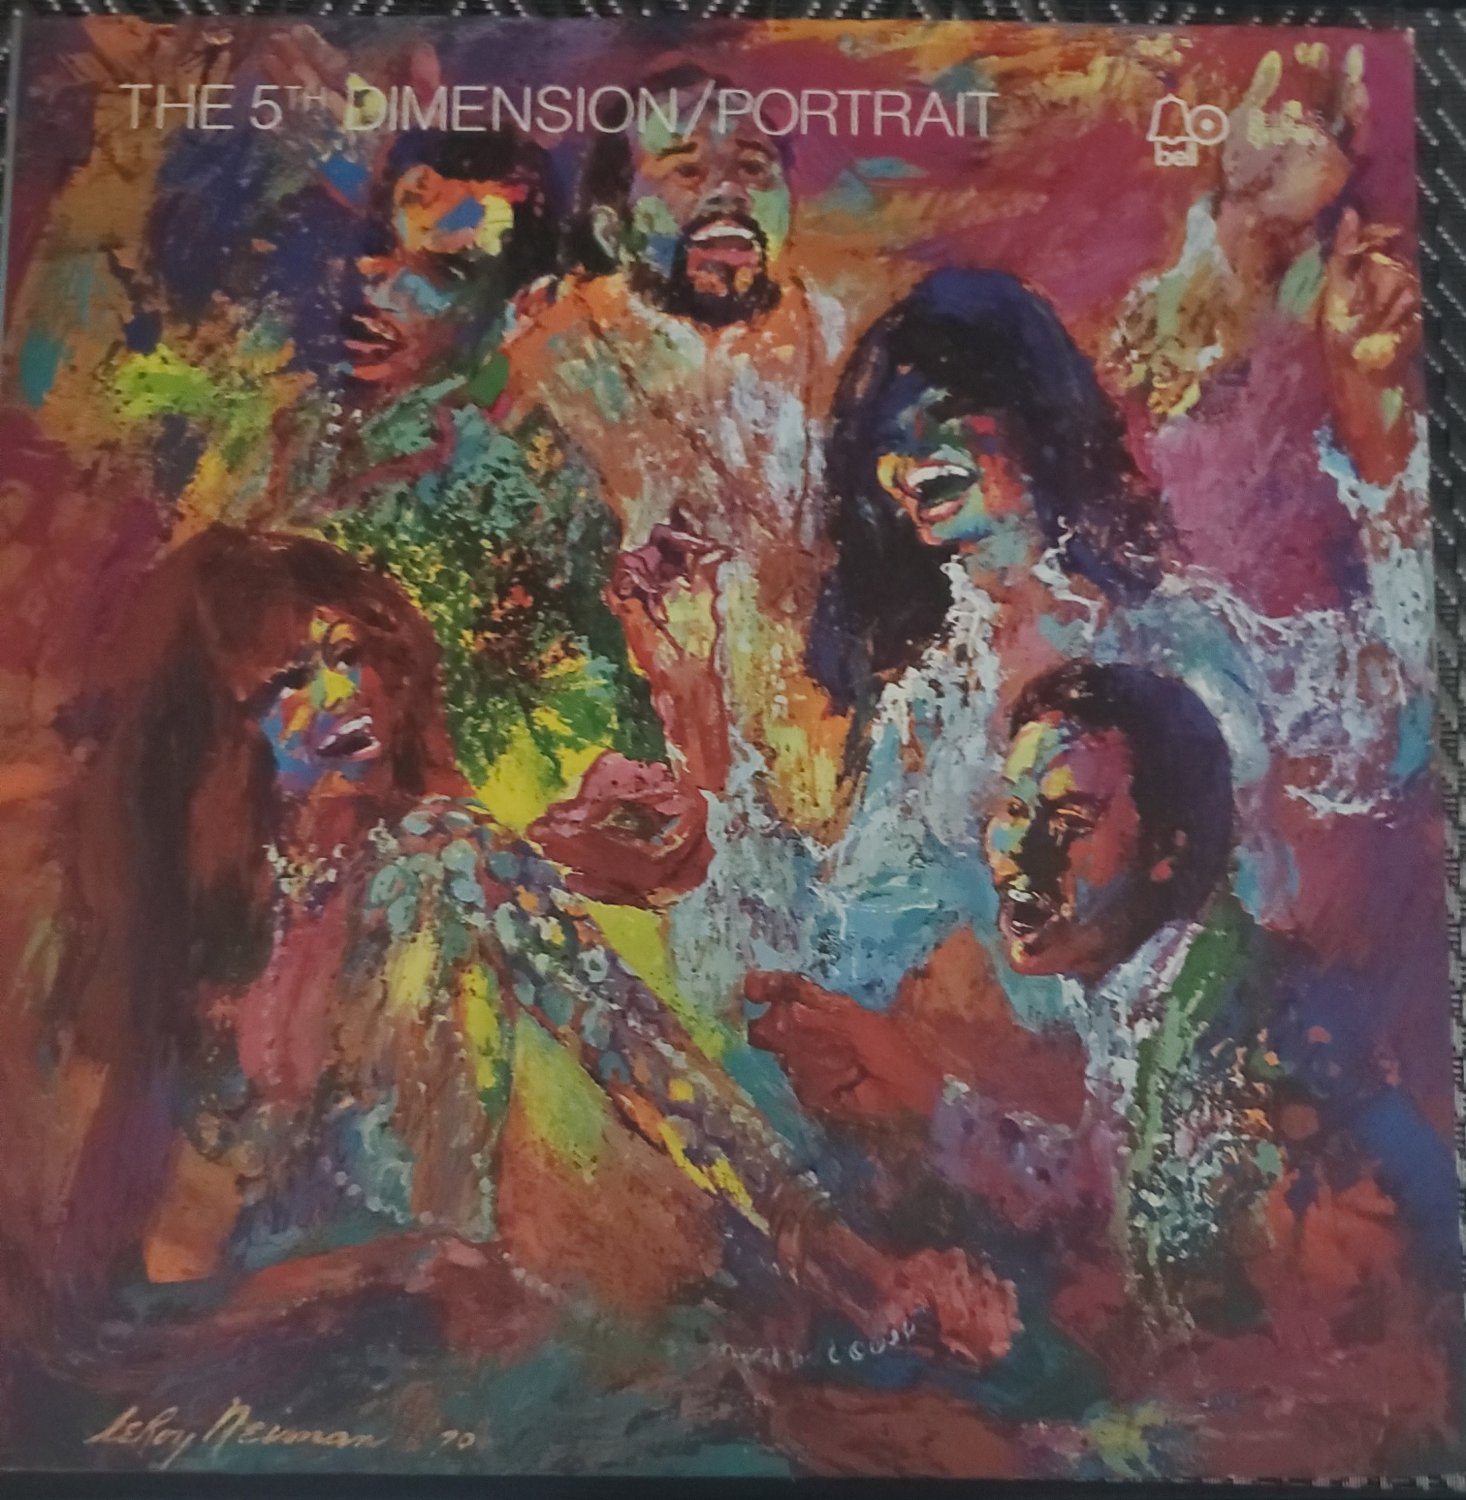 The 5th Dimension Portrait BW Pitman Cover Gatefold Sleeve Album LP Record Vinyl 33 RPM